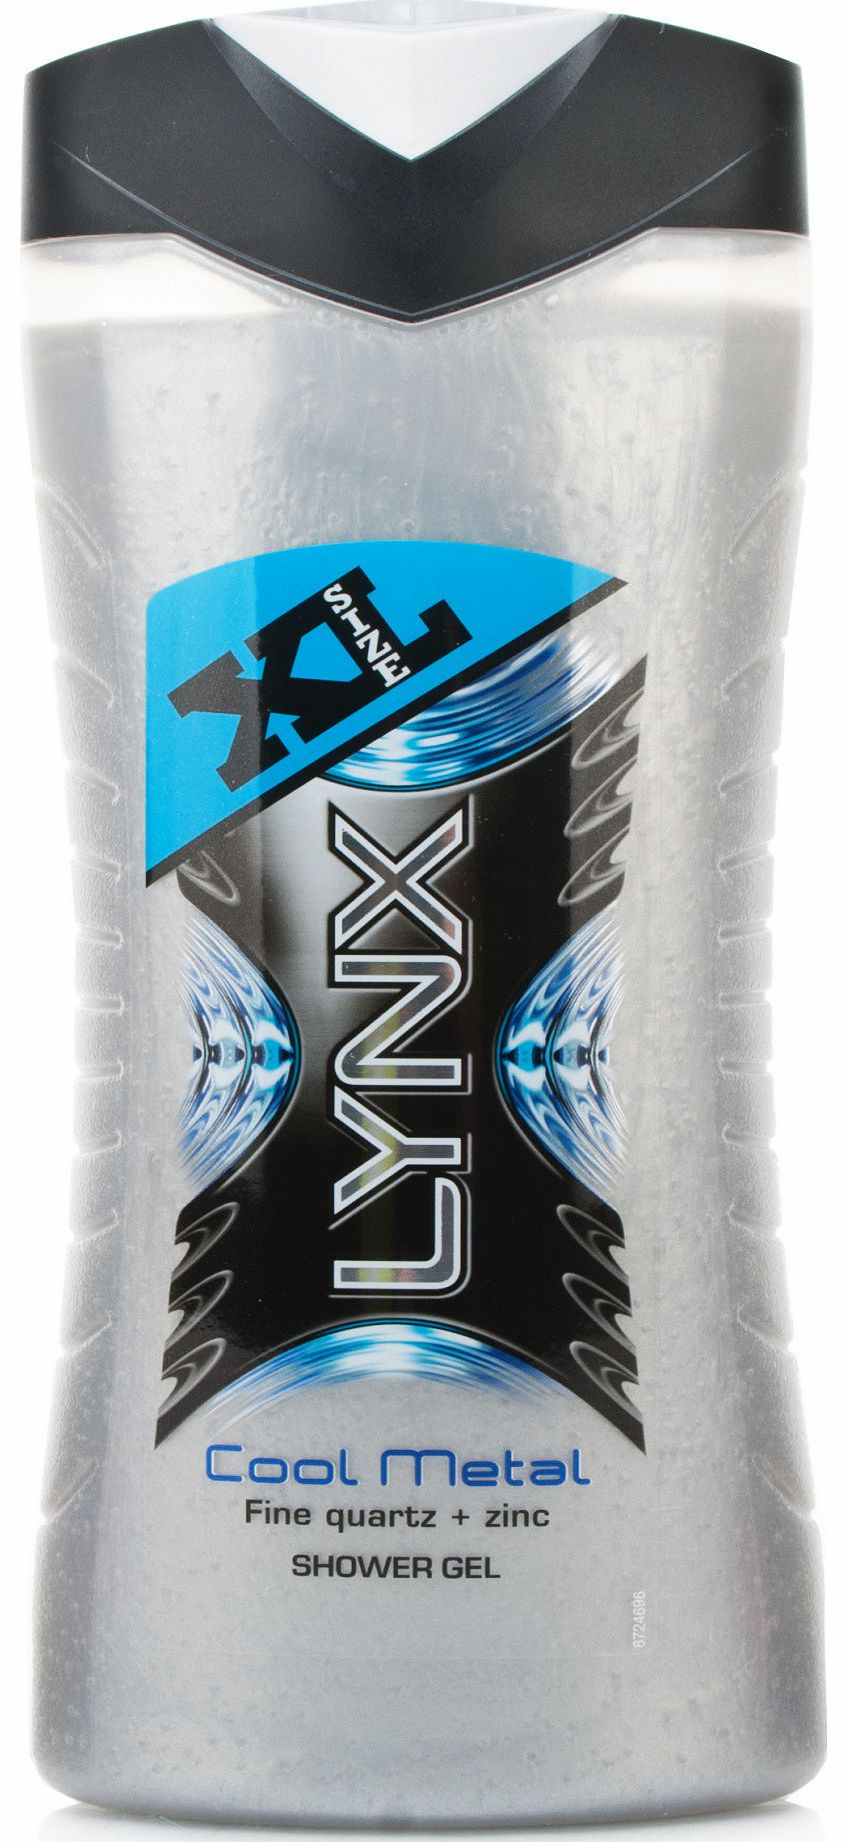 Lynx XL Cool Metal Shower Gel